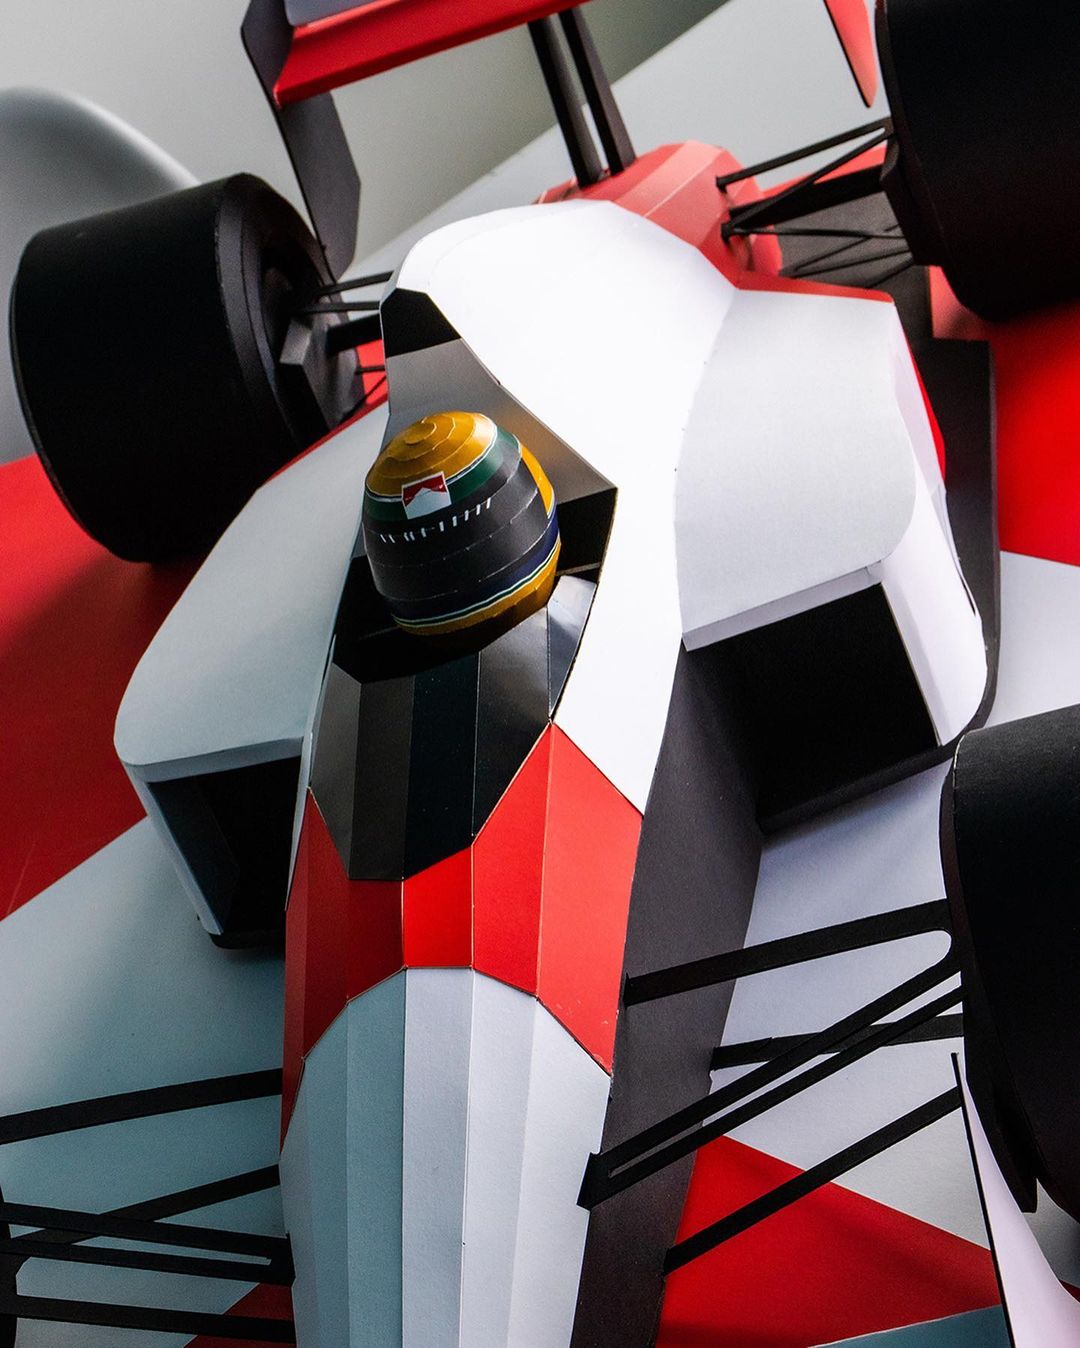 Formula 1 Legend Car Sculpture Close-Up View 